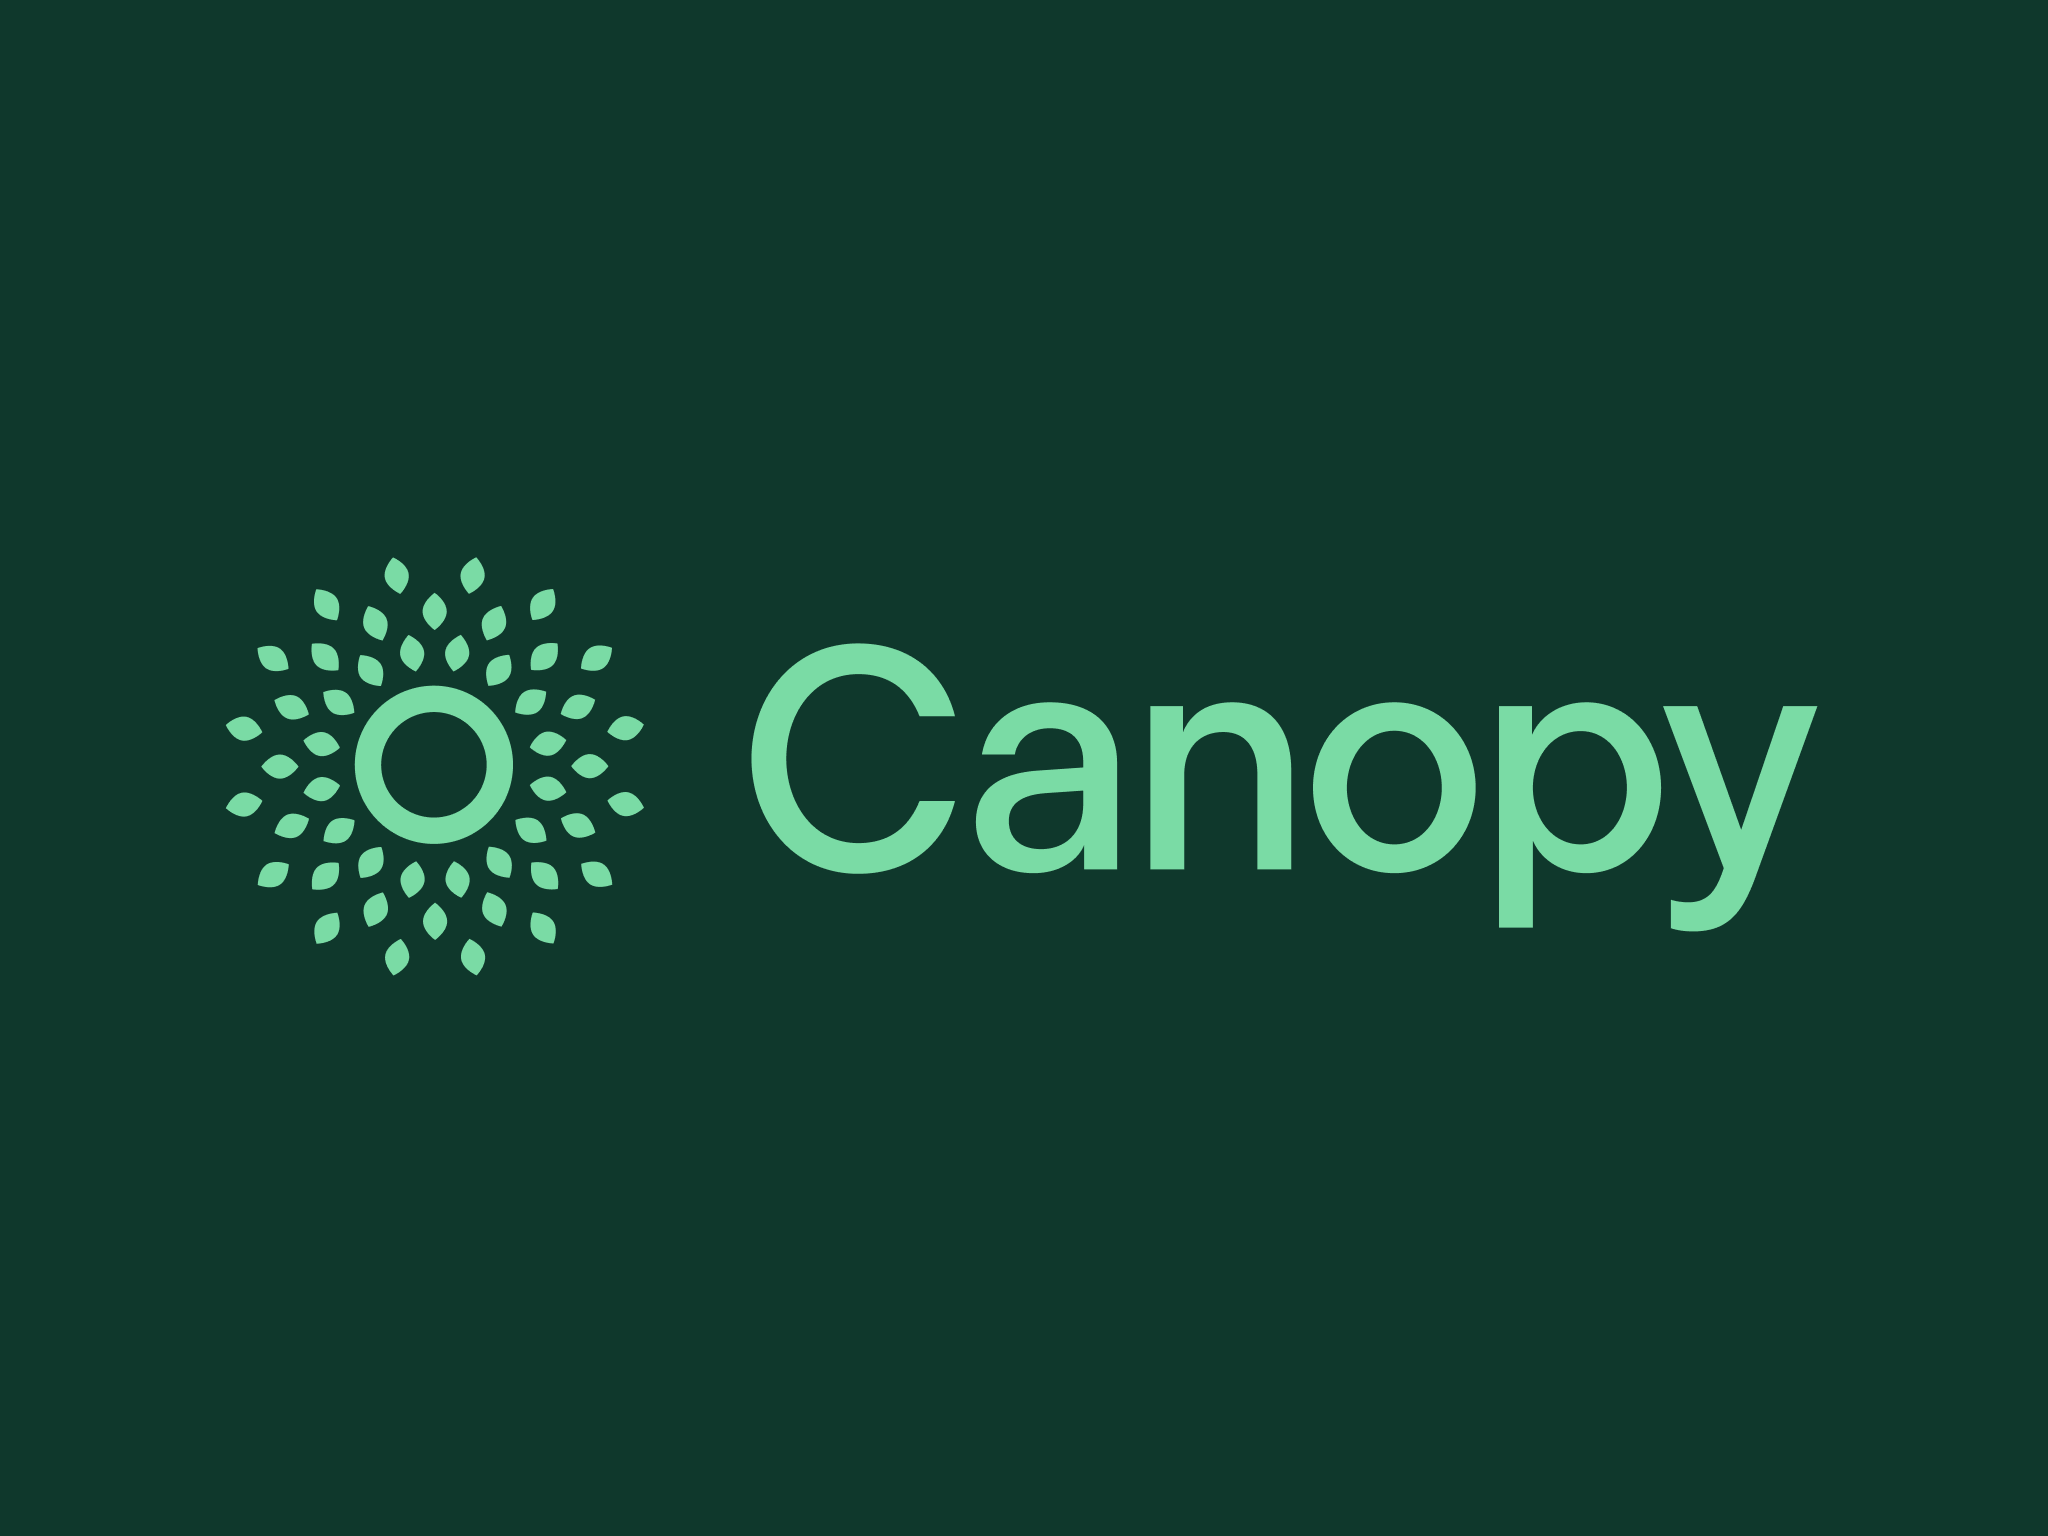 The new Canopy logo